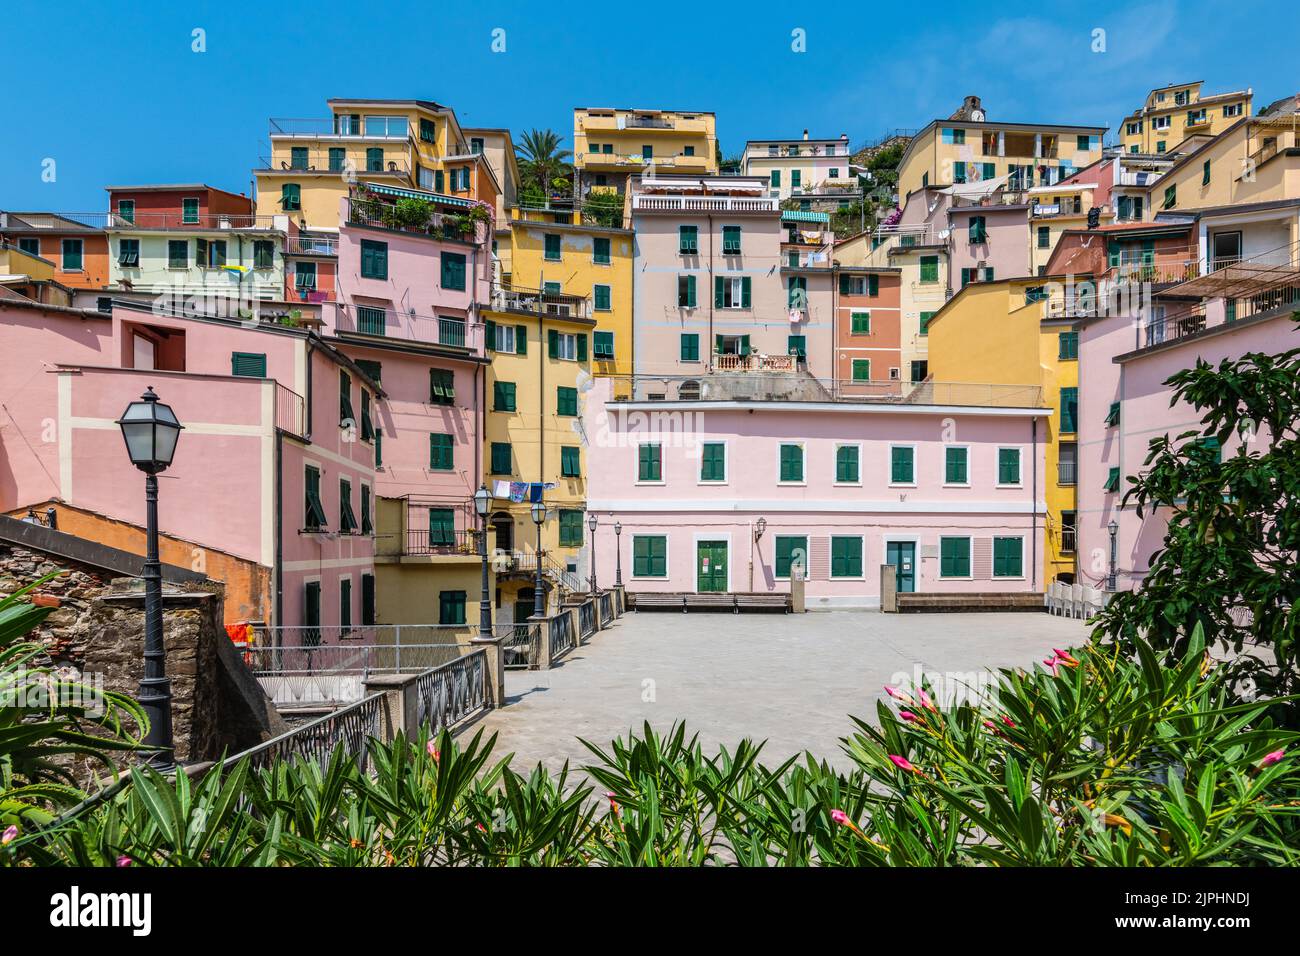 Riomaggiore colorful houses in town. Cinque Terre, Italy. Stock Photo